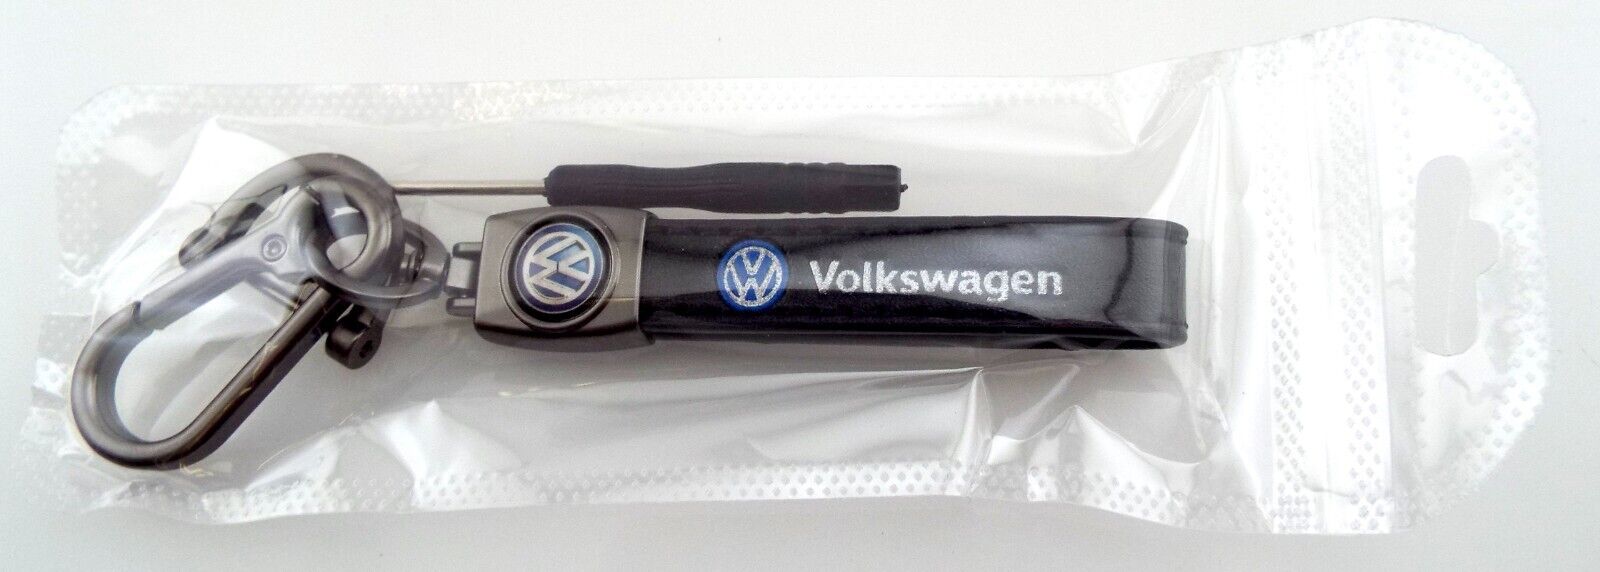 Volkswagen - Genuine Leather Keychain Car Key Chain Ring - NEW